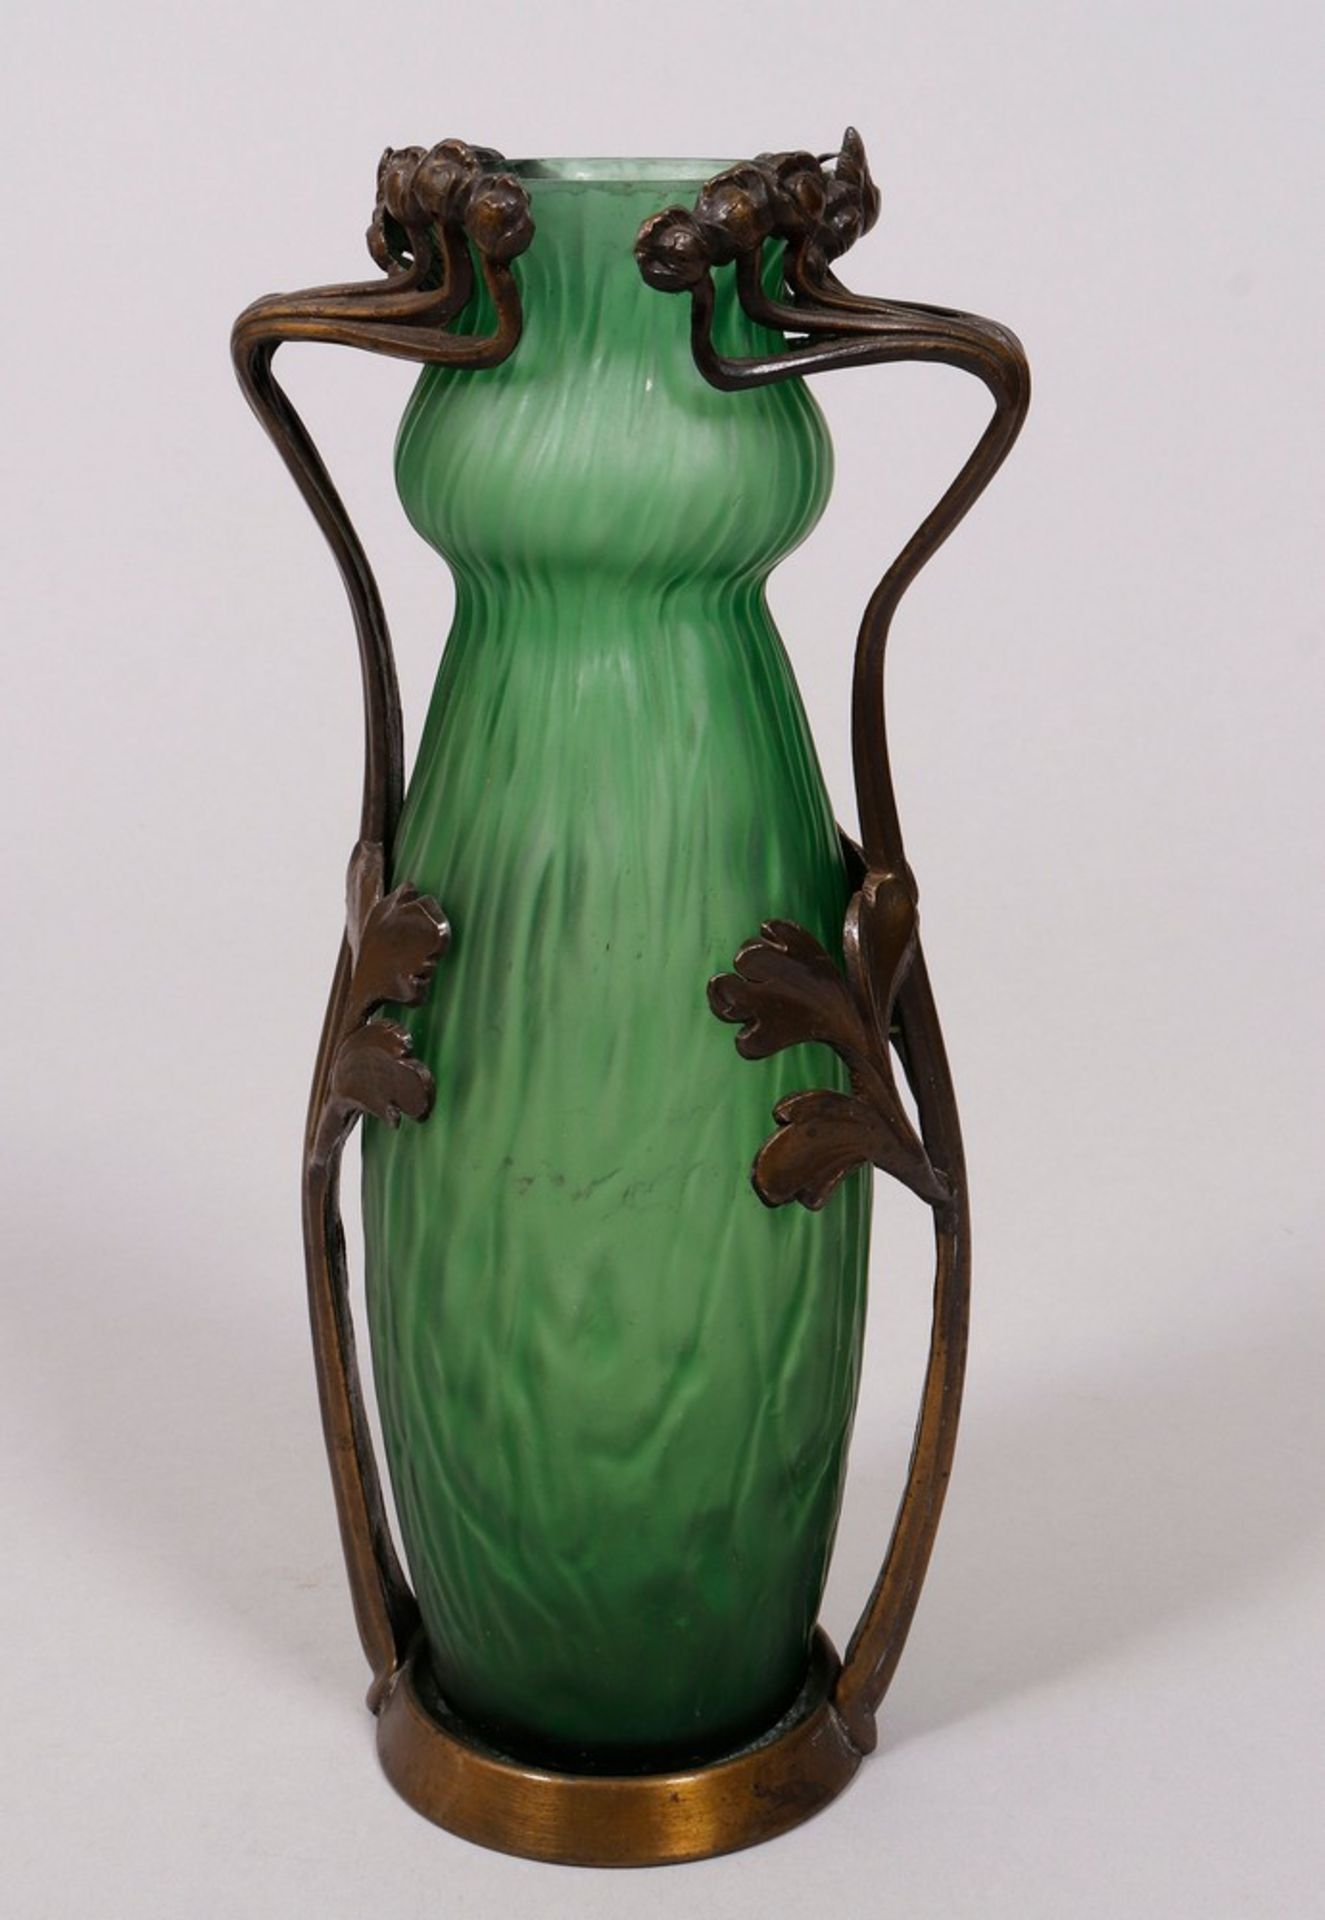 Jugendstil-Vase, wohl Böhmen, um 1900  - Bild 2 aus 4